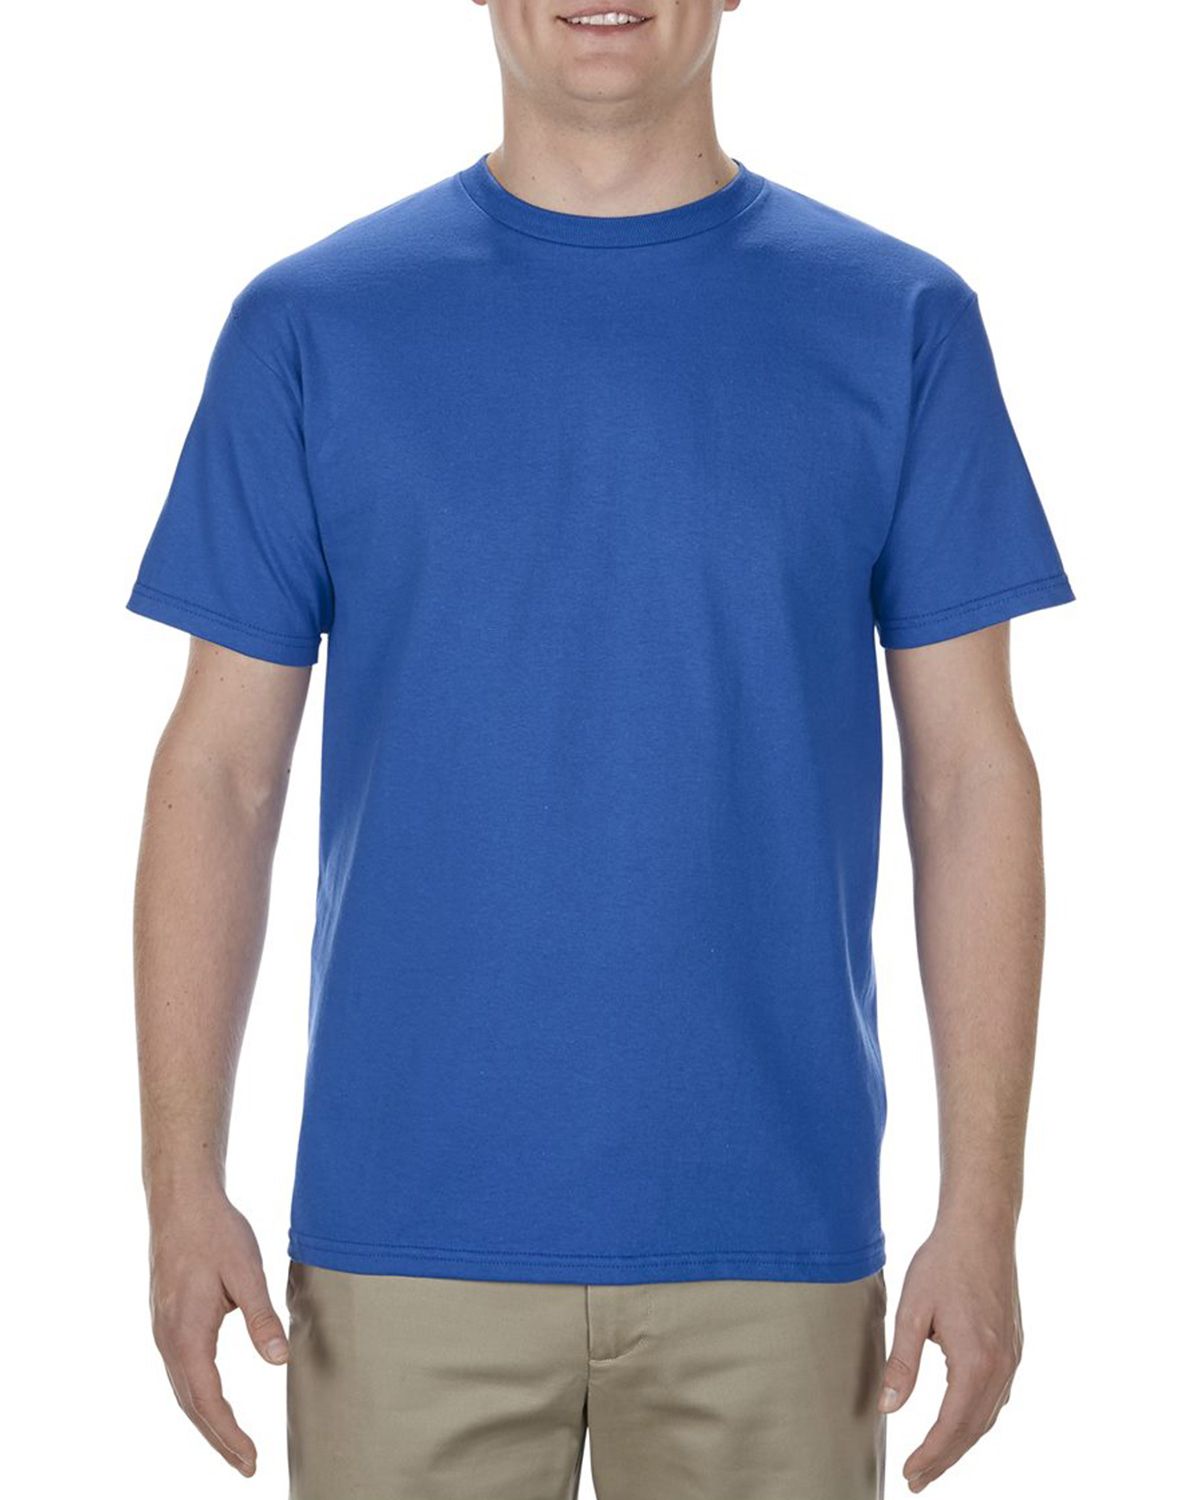 Alstyle 1701 Premium T-Shirt - Shop at ApparelnBags.com